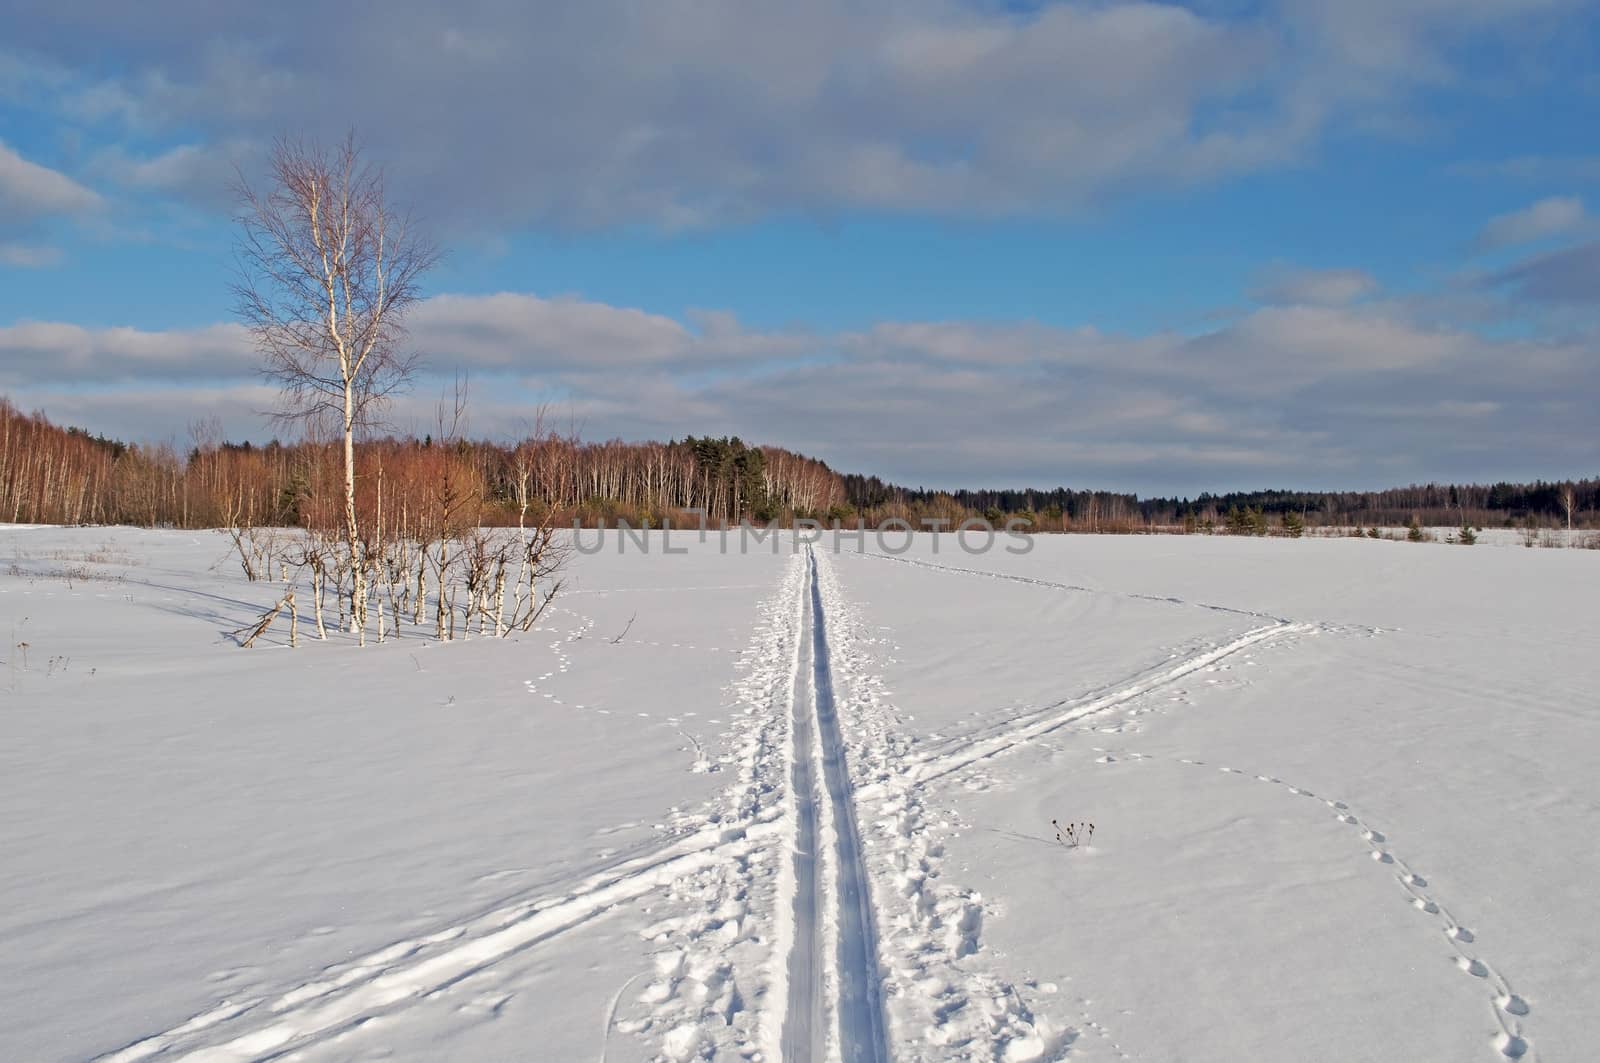 Ski track in a field by wander